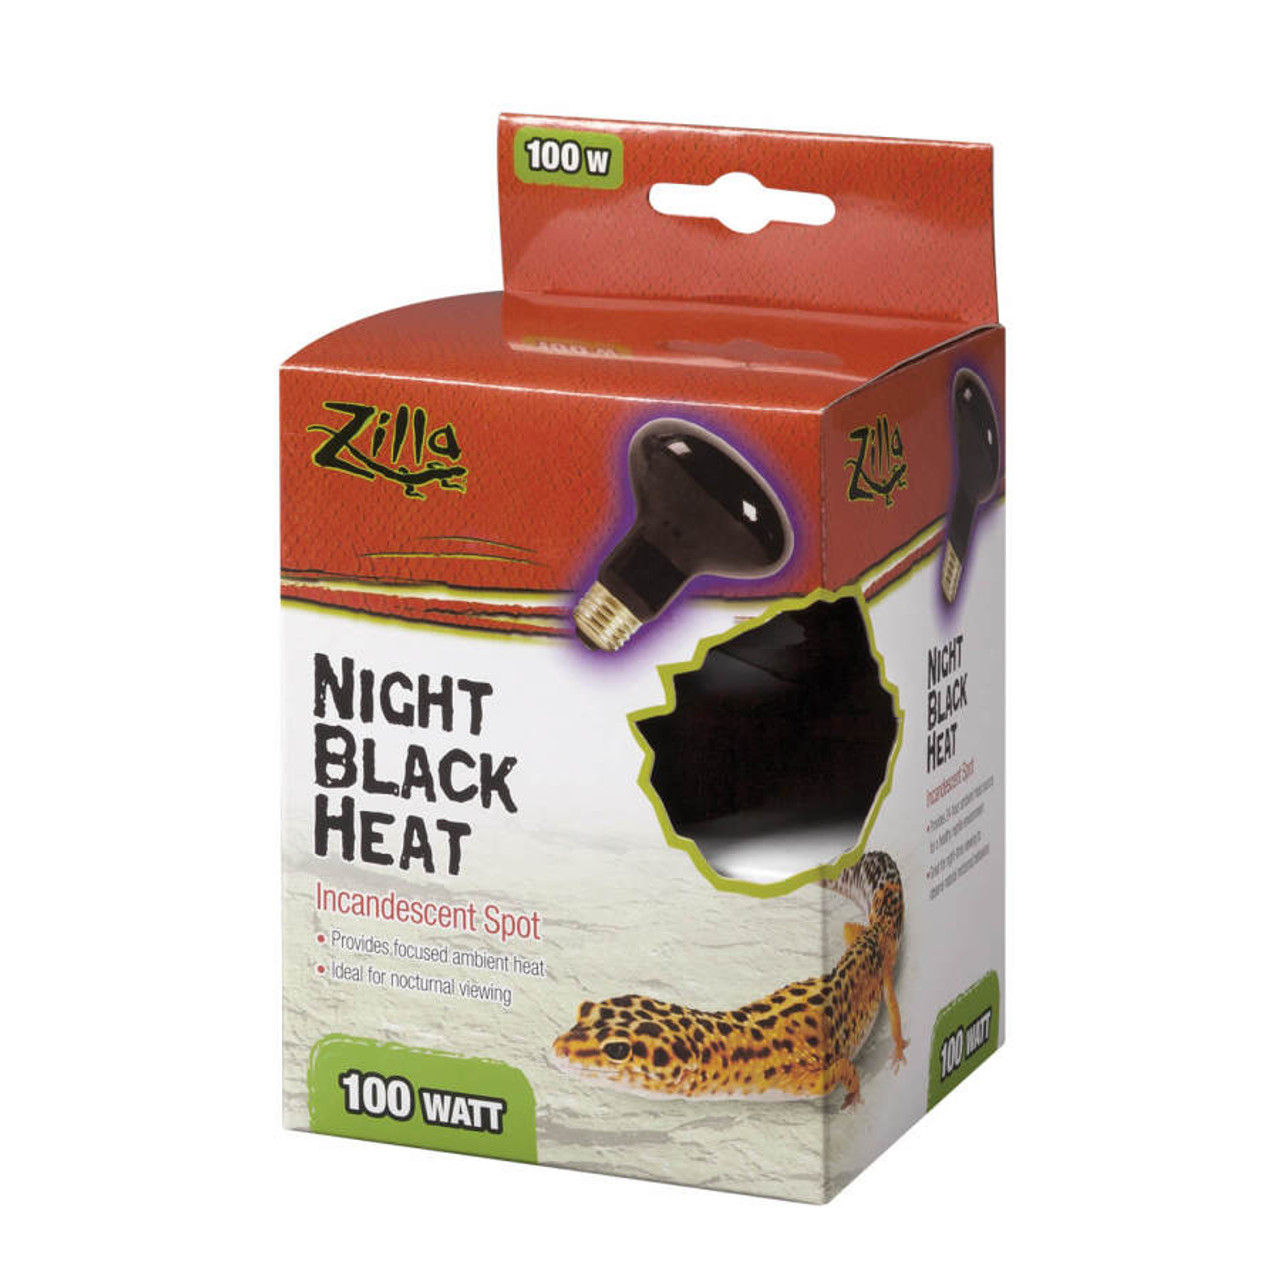 Zilla night black reptile heat bulb. 100 watt